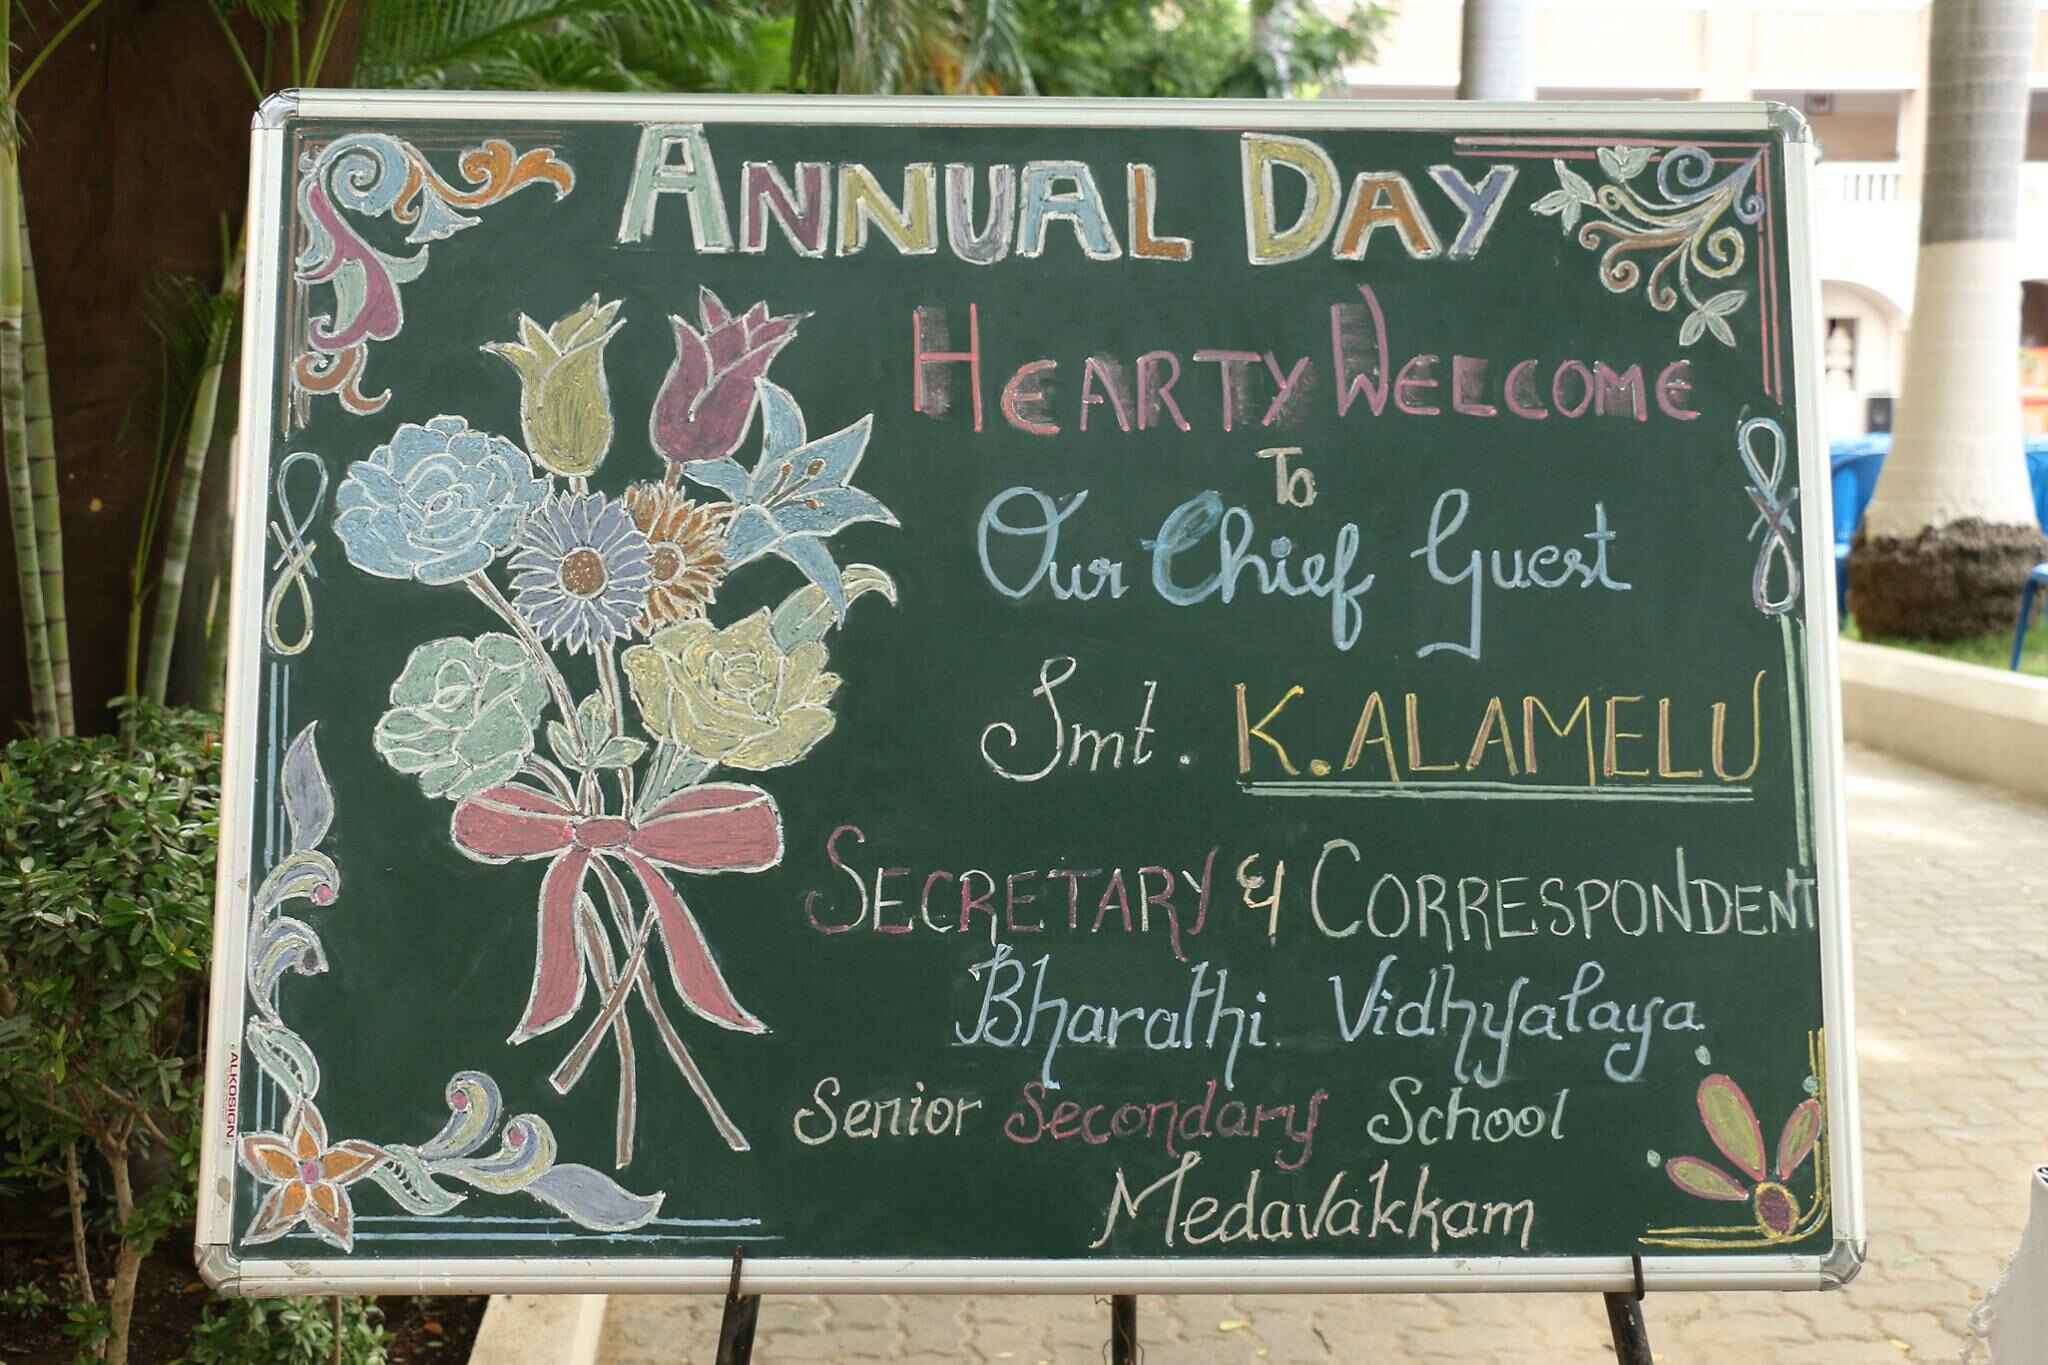 Senior Annual Day Celebrations @ Swamy's School - 29-Aug-2017